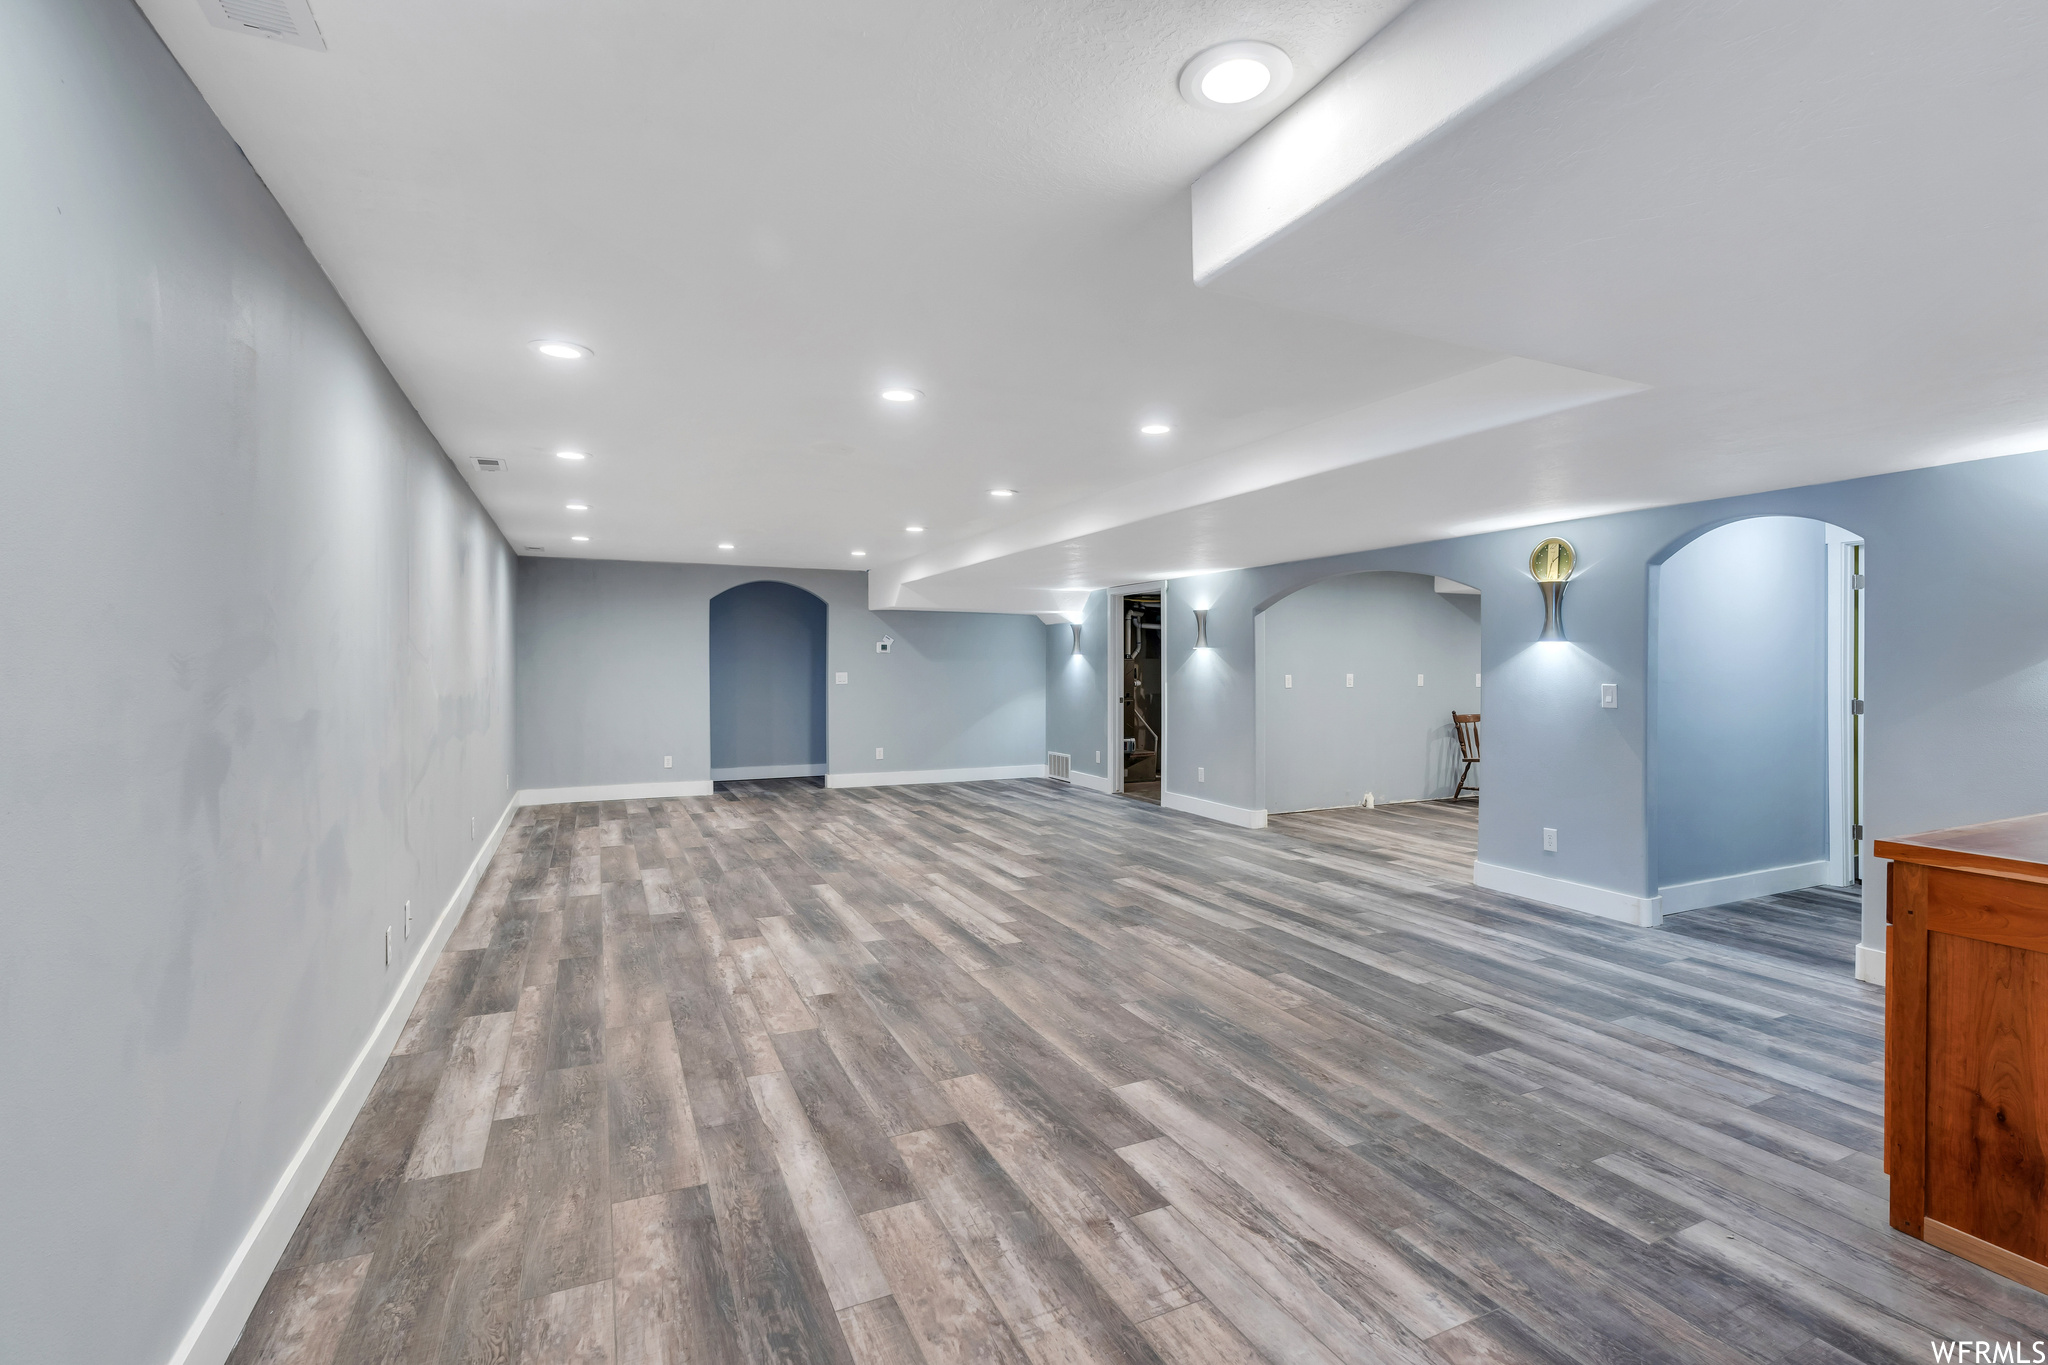 Basement featuring hardwood / wood-style floors